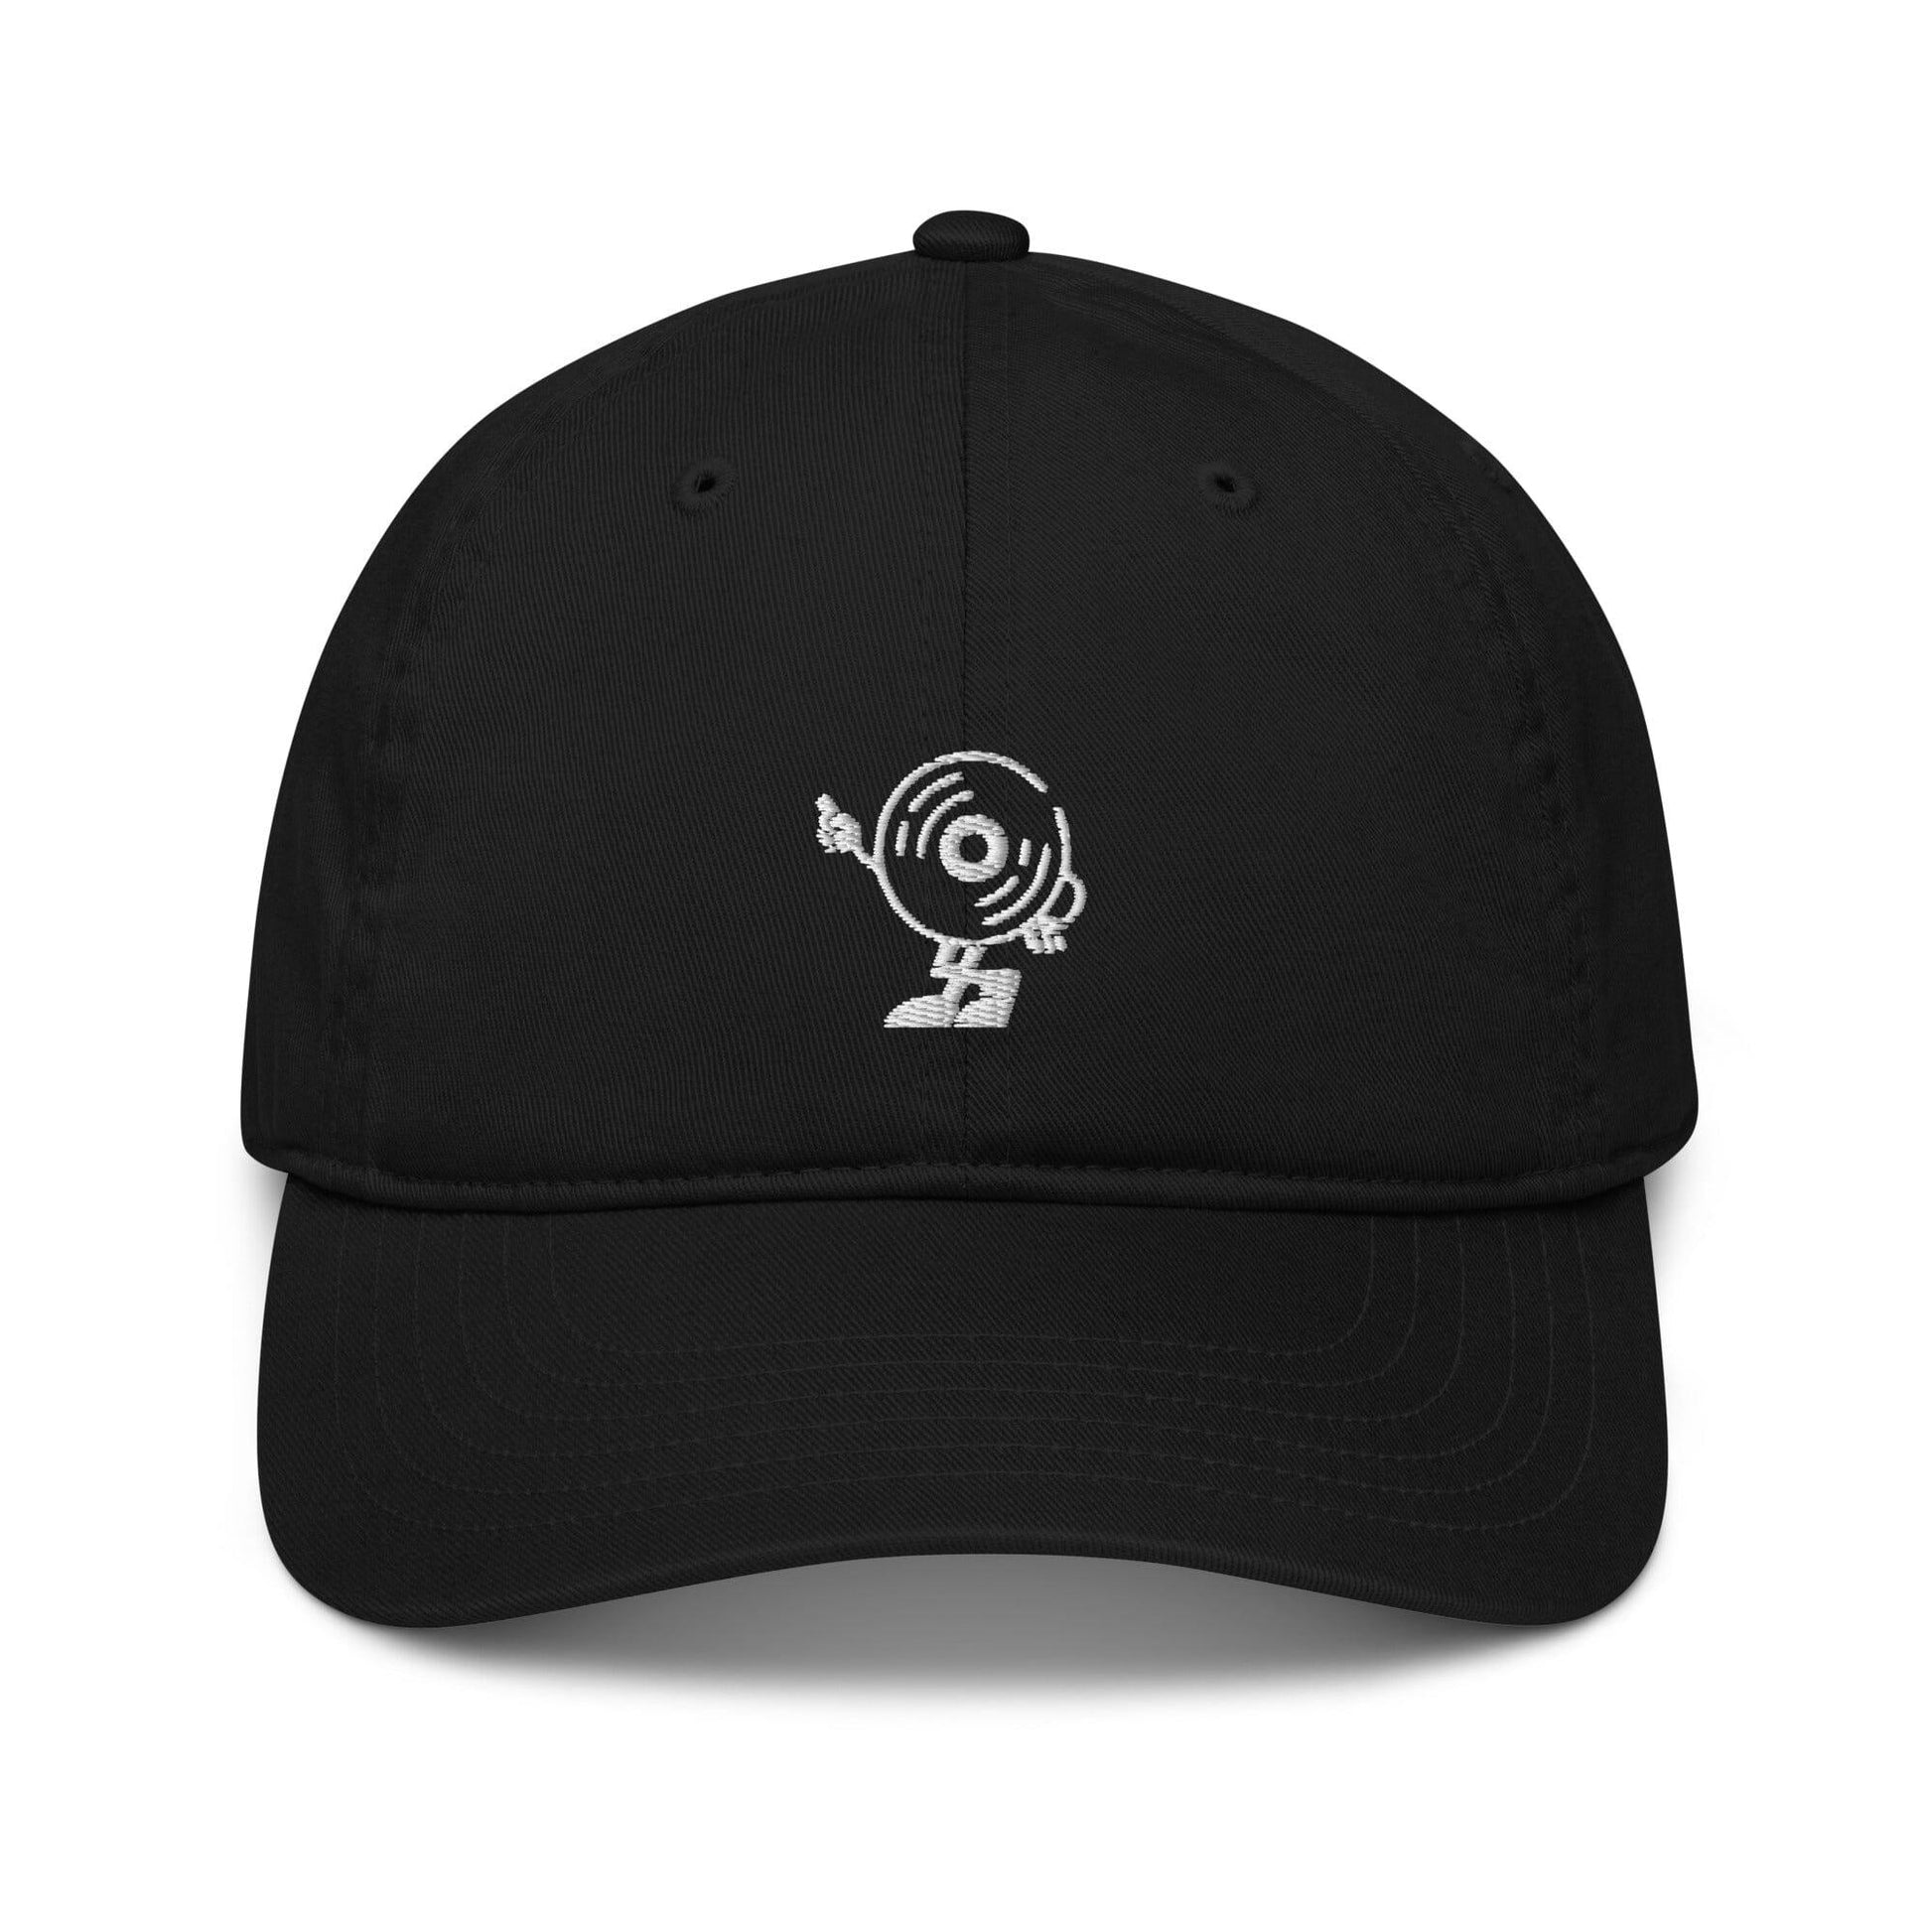 Vinyl Fever Organic Baseball Hat Hats Headphones.com Black 